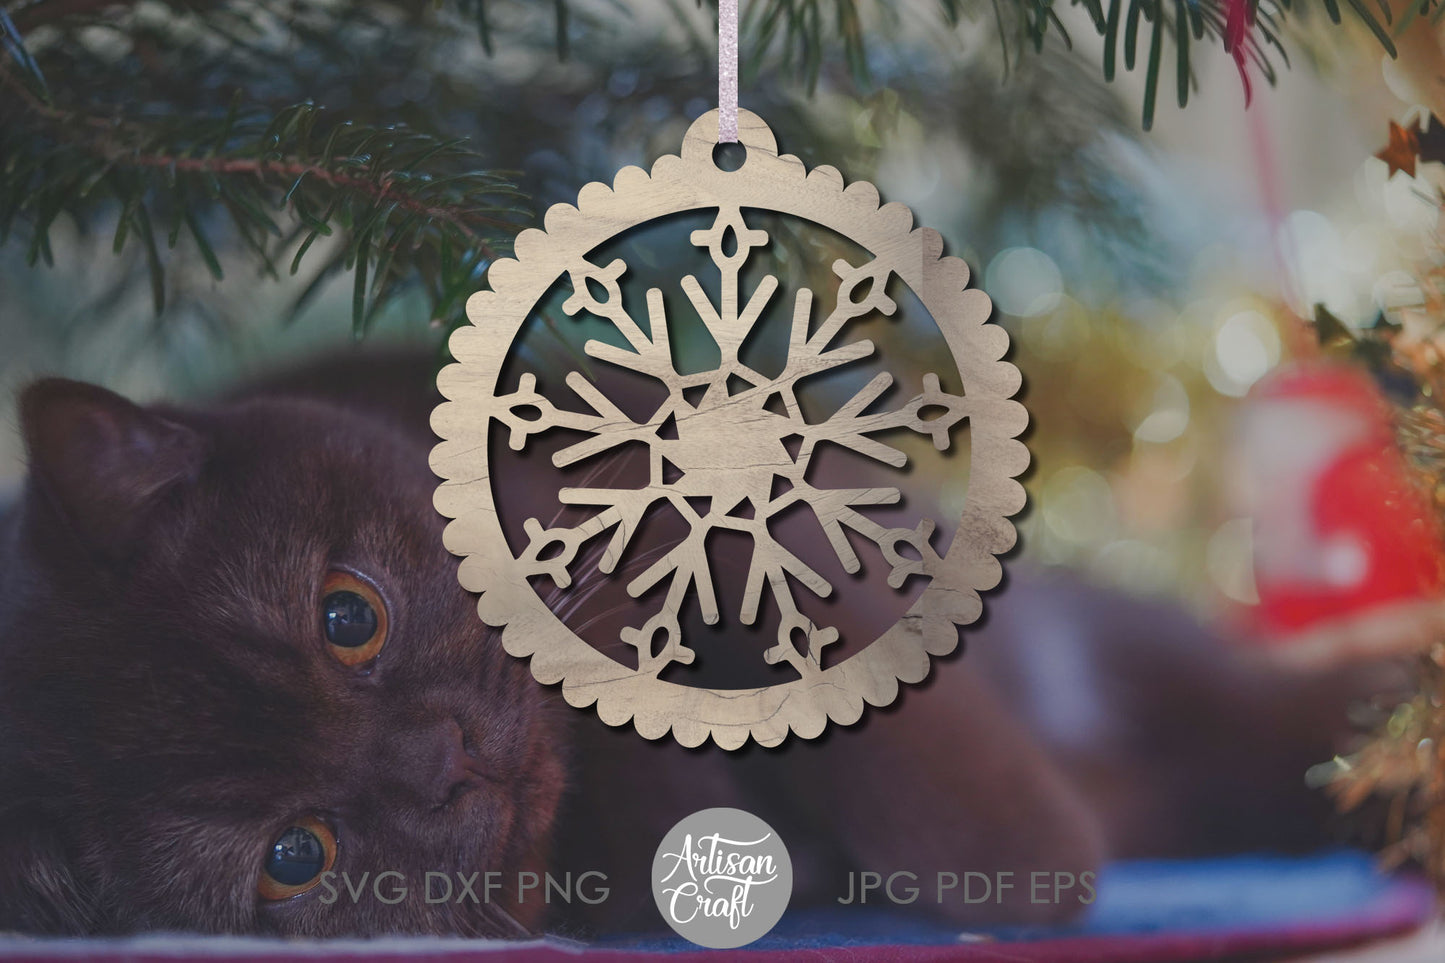 Snowflake ornament SVG, scalloped border